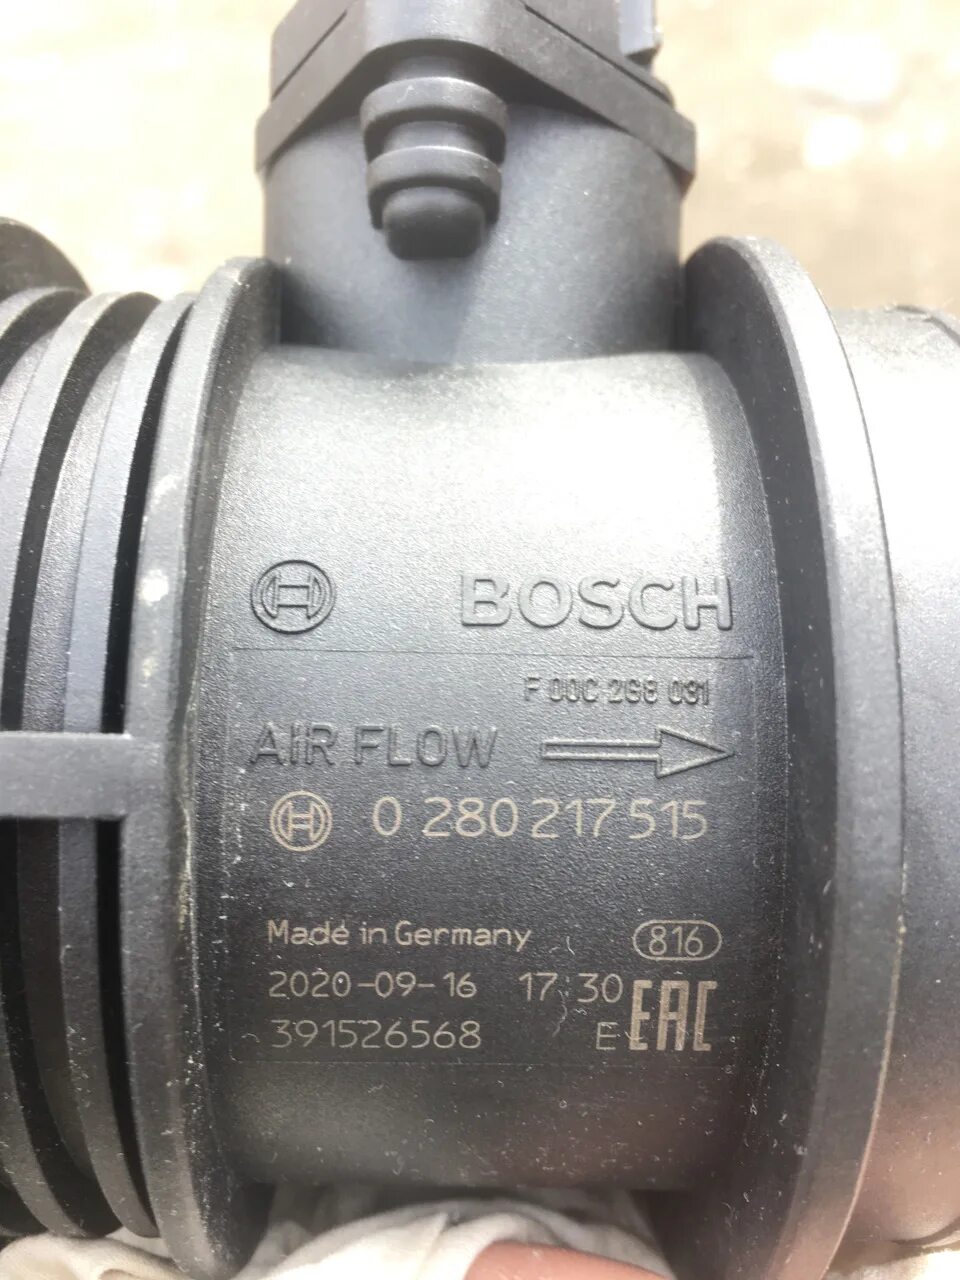 ДМРВ 116 Bosch. ДМРВ бош 116 оригинал. 0280217117 Bosch расходомер. ДМРВ 037 оригинал.